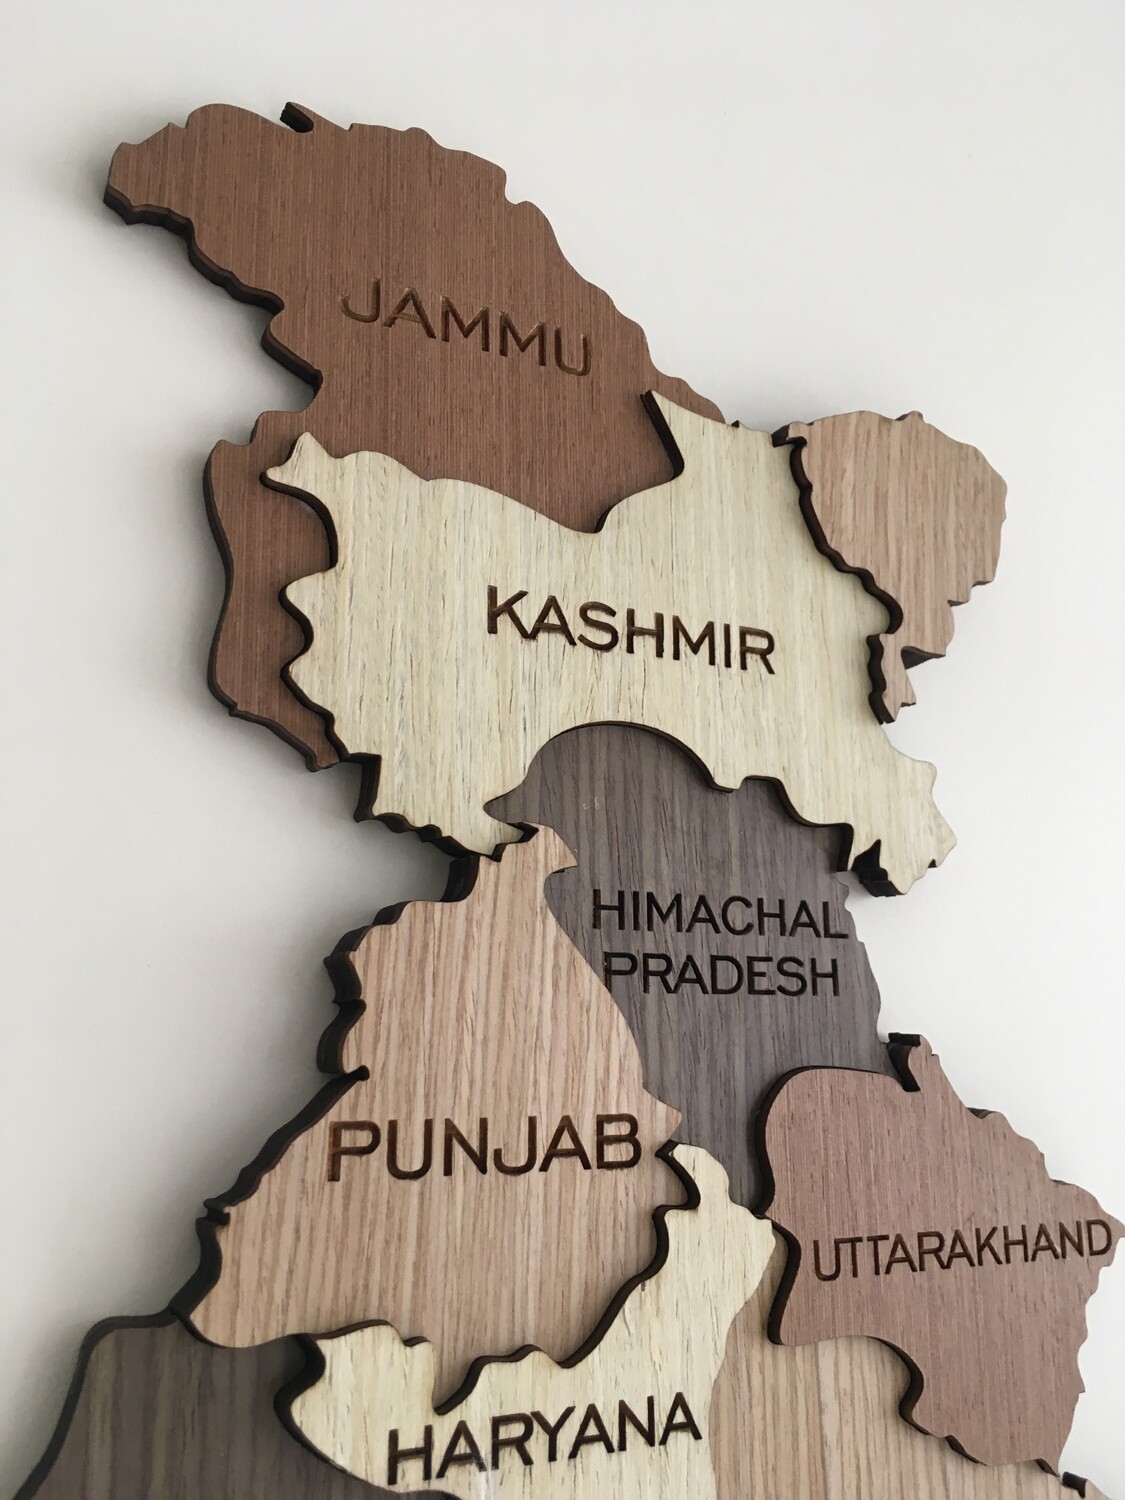 3D WOOD INDIA MAP – PREMIUM WALL DECOR